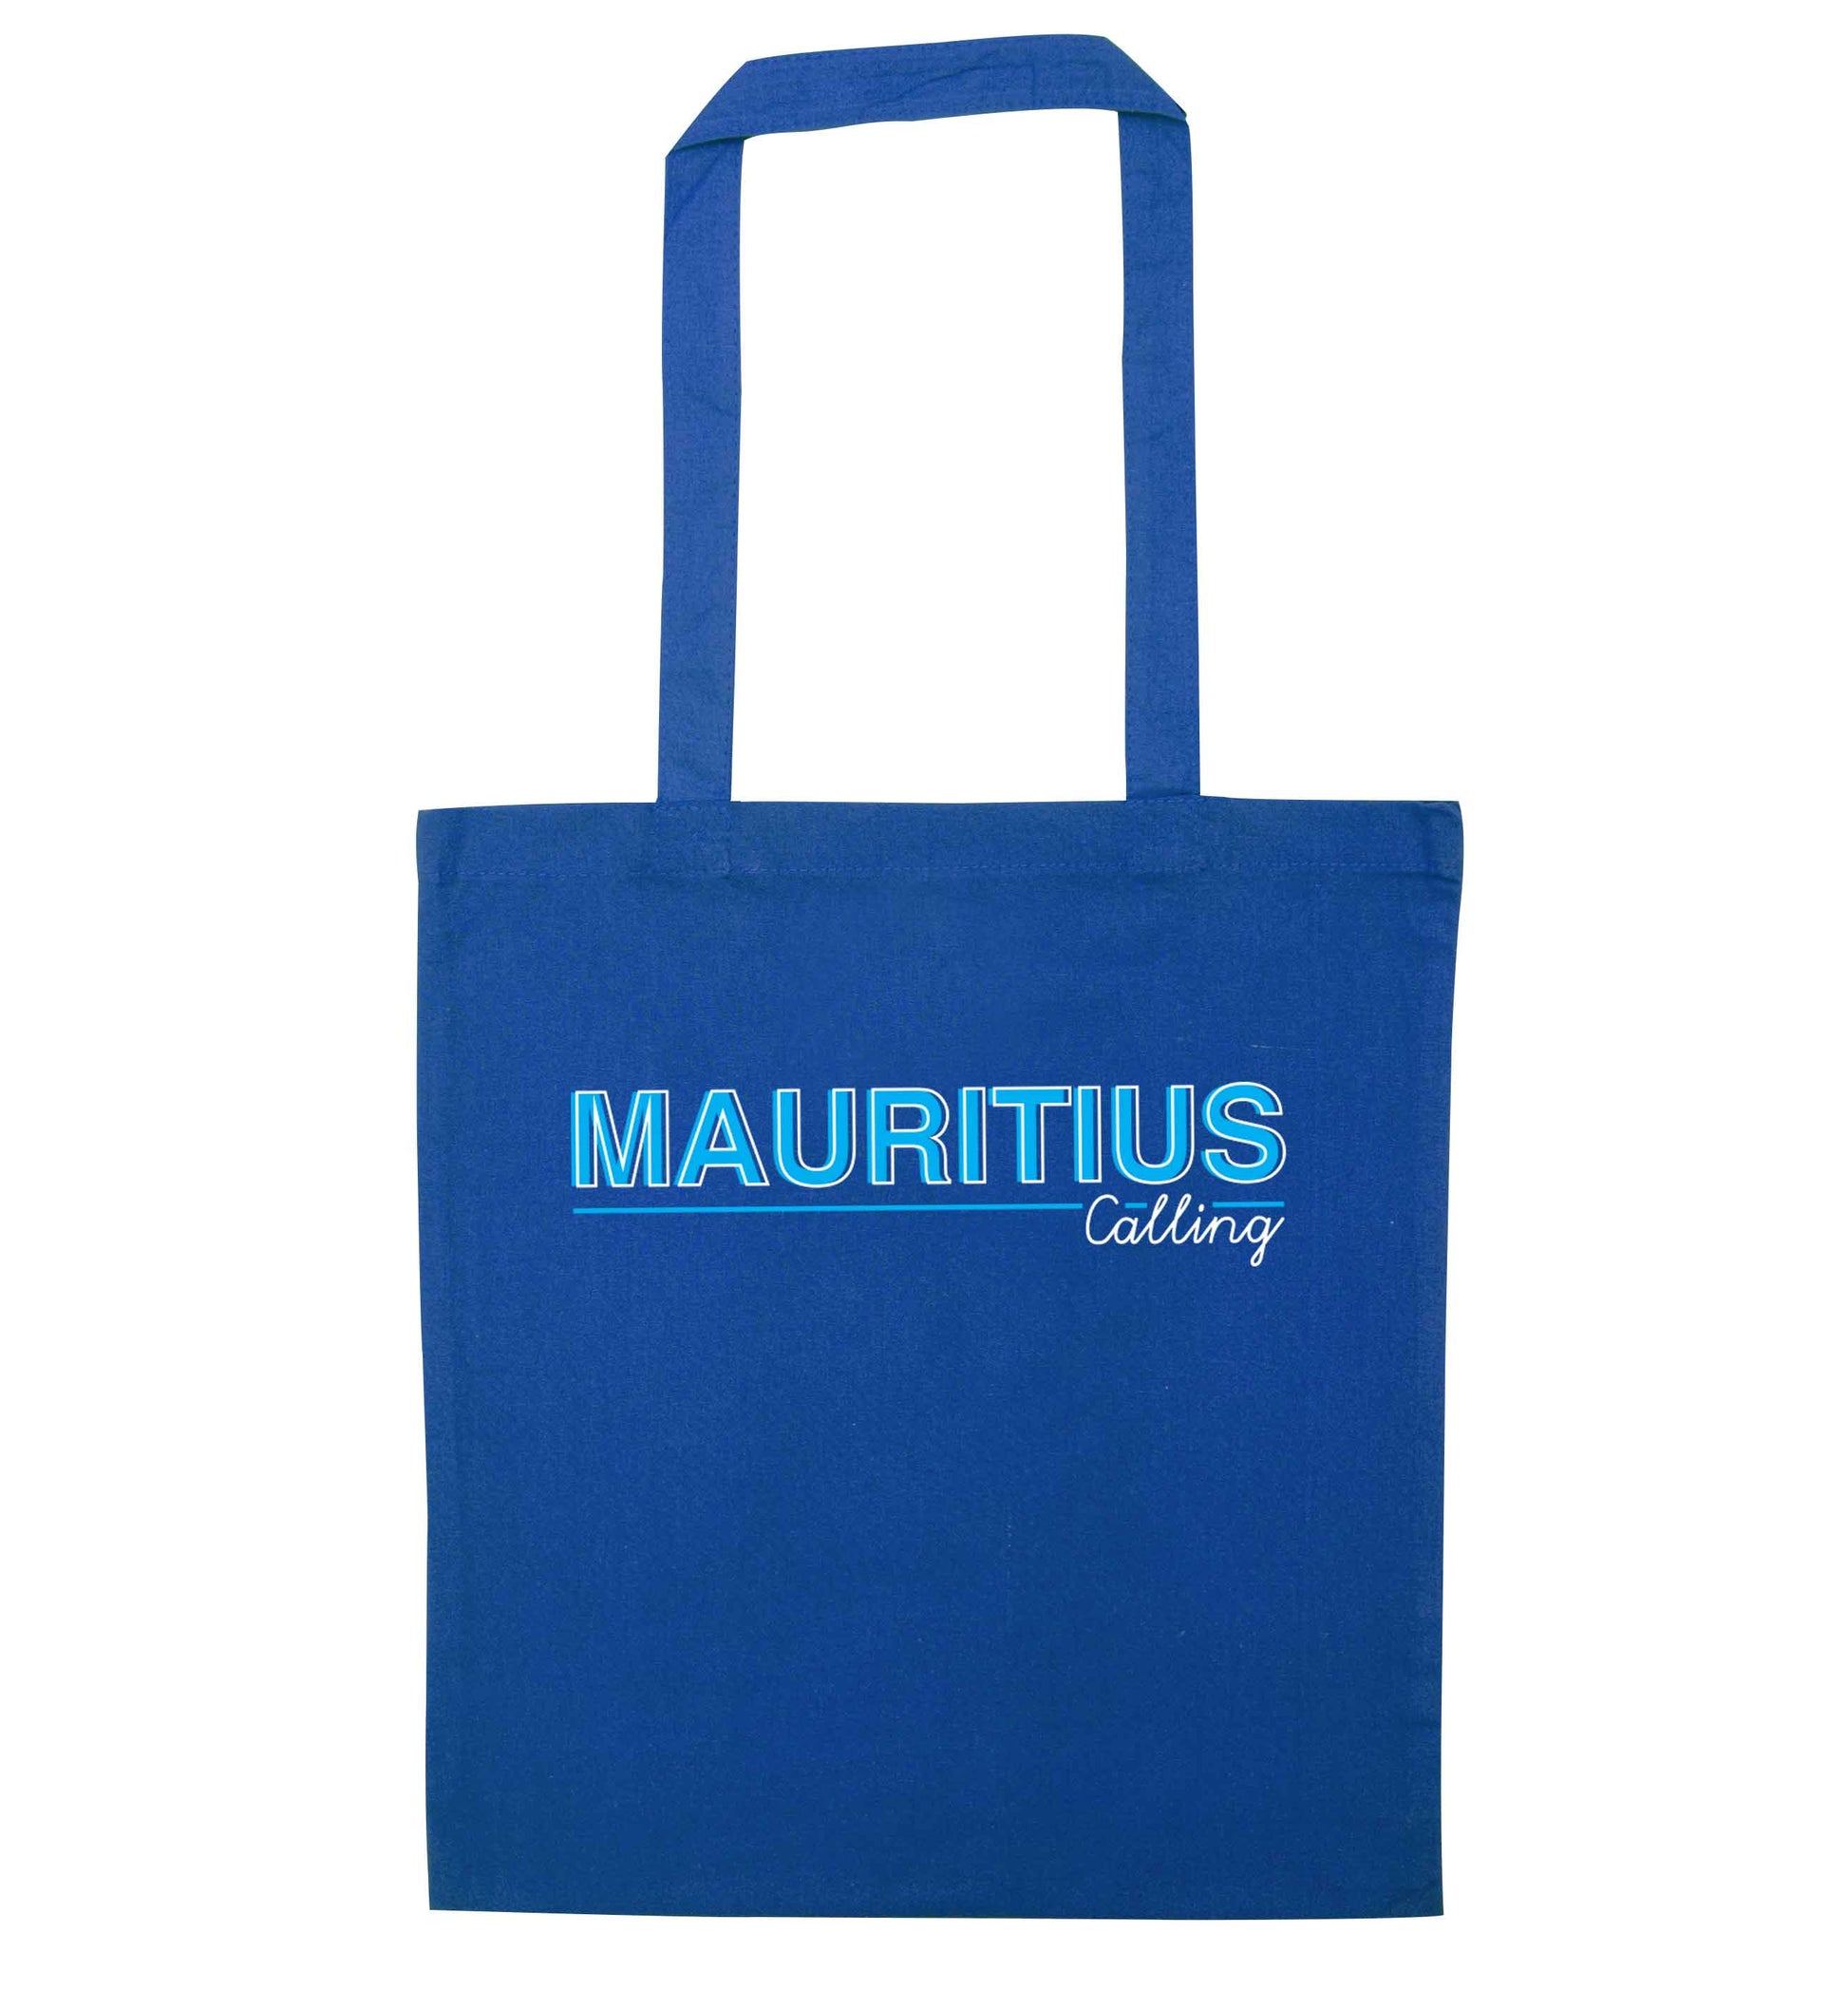 Mauritius calling blue tote bag